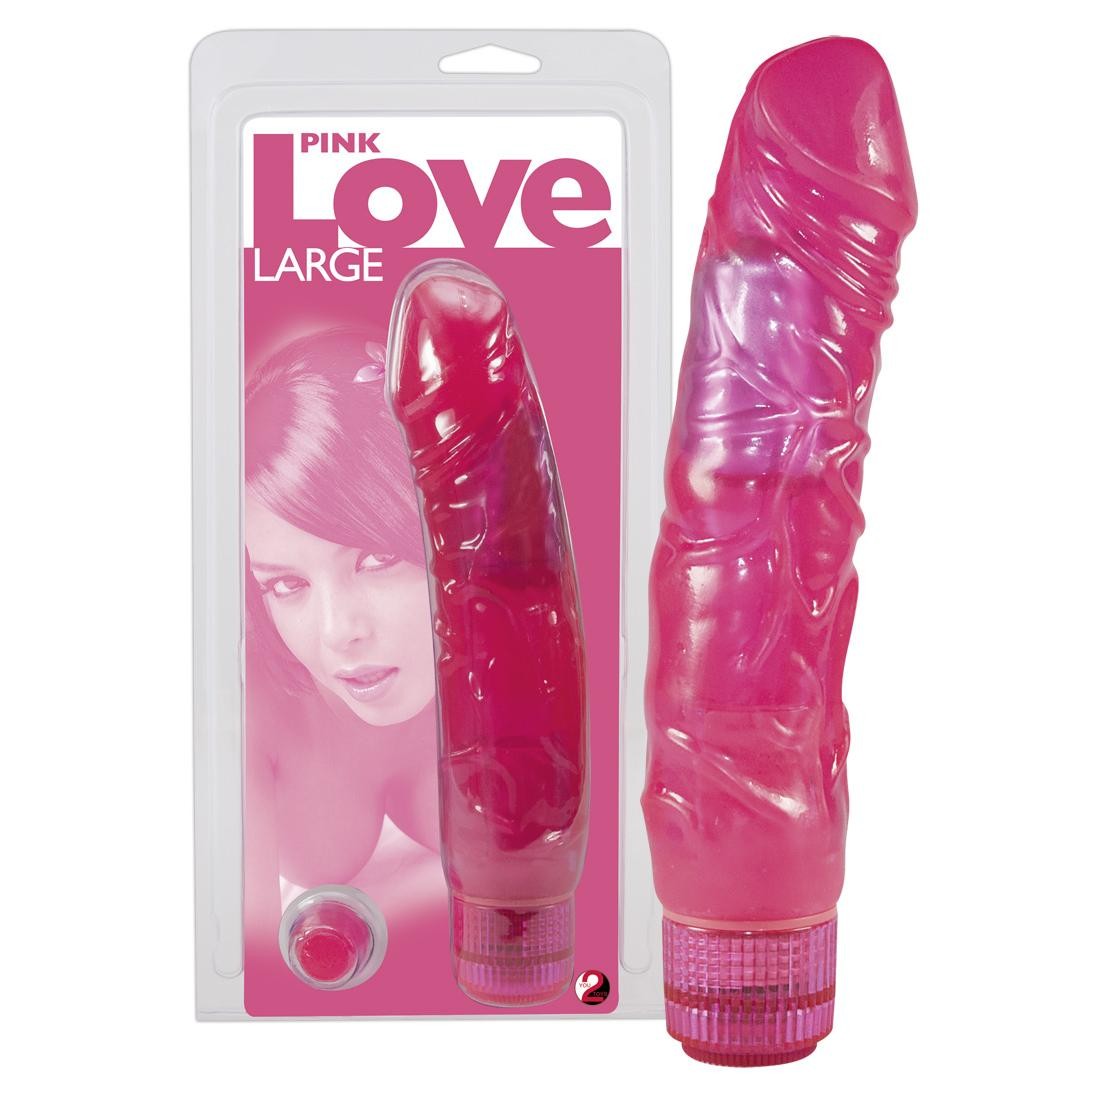  You2Toys  -  Pink  Love  large  -  Vibrator 